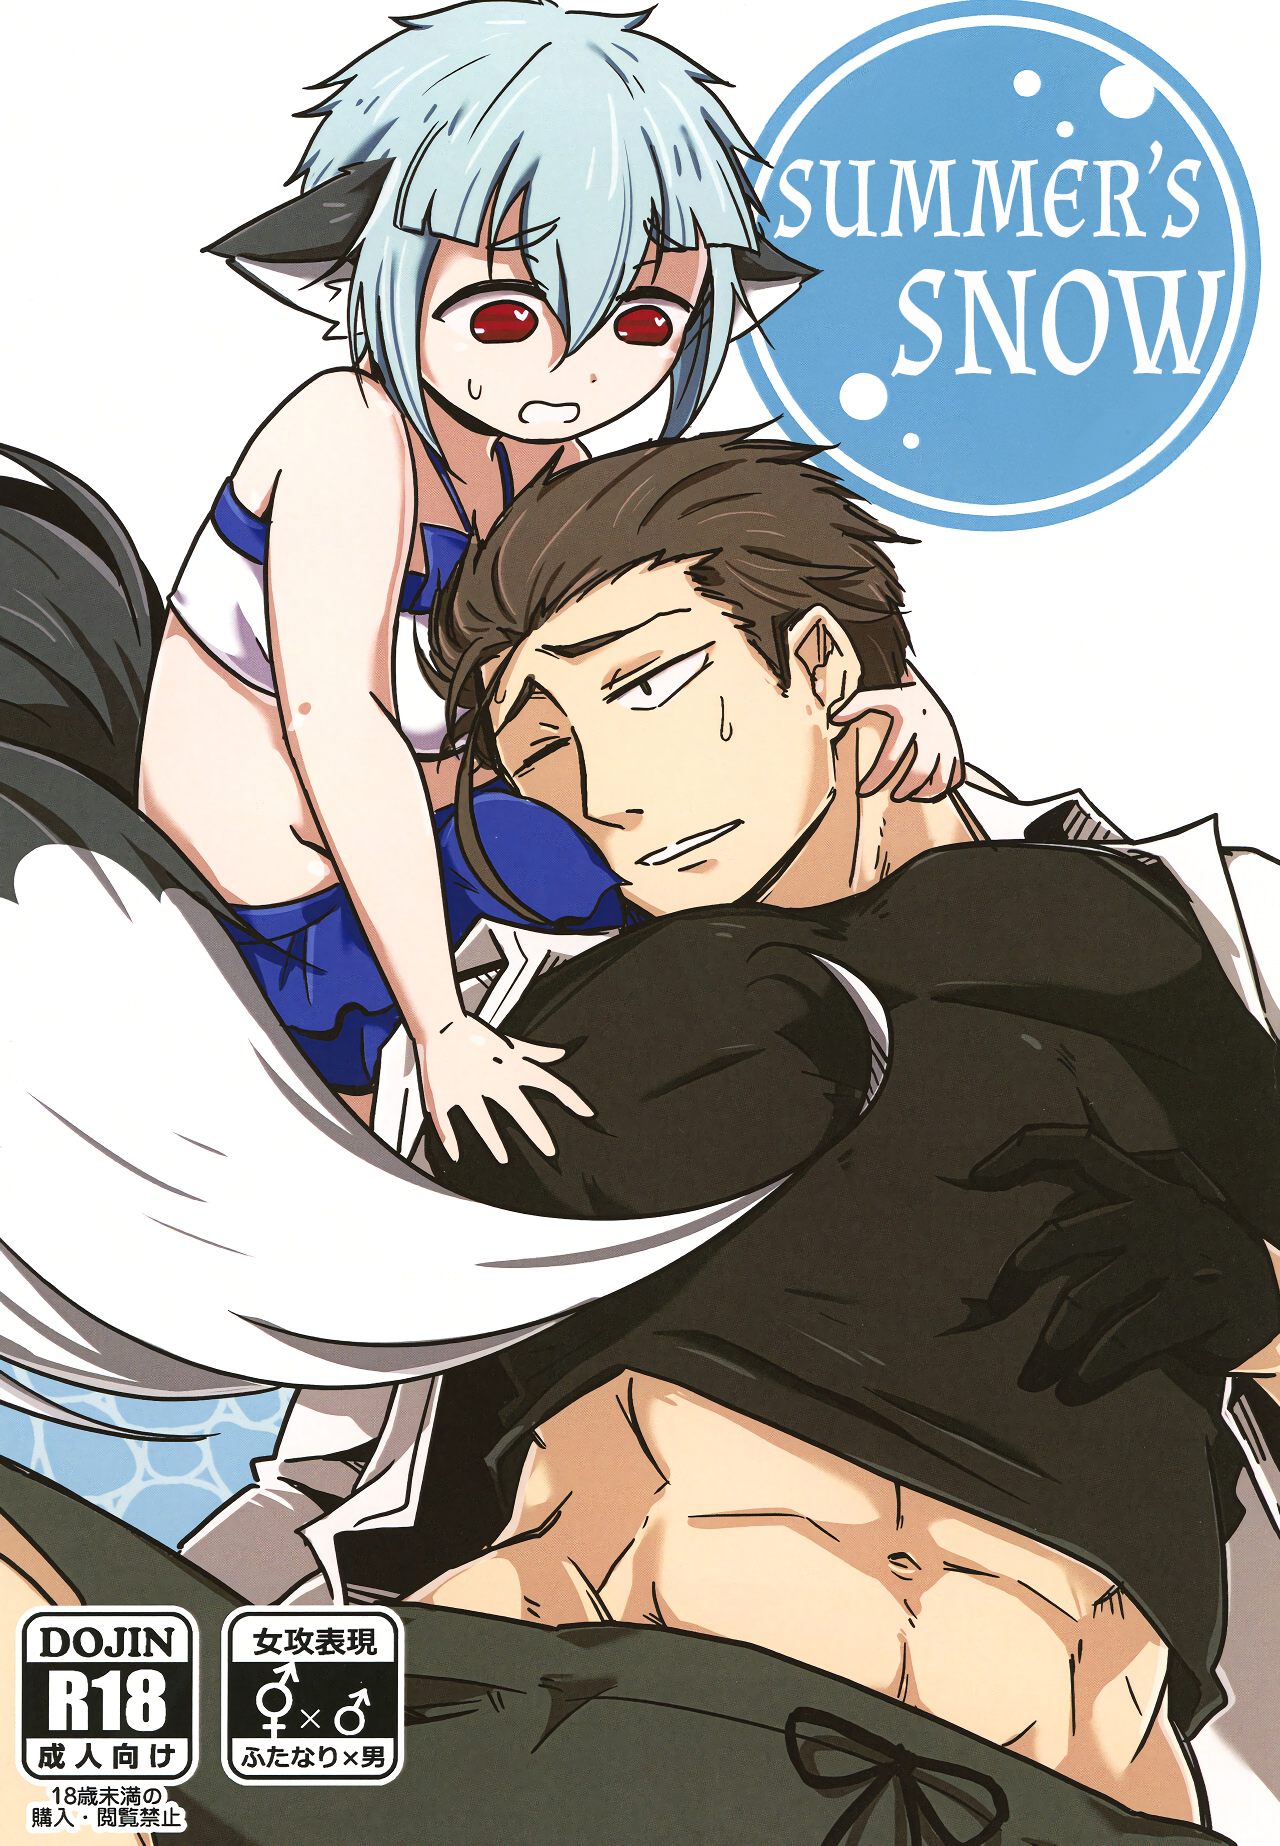 Summer’s Snow manga